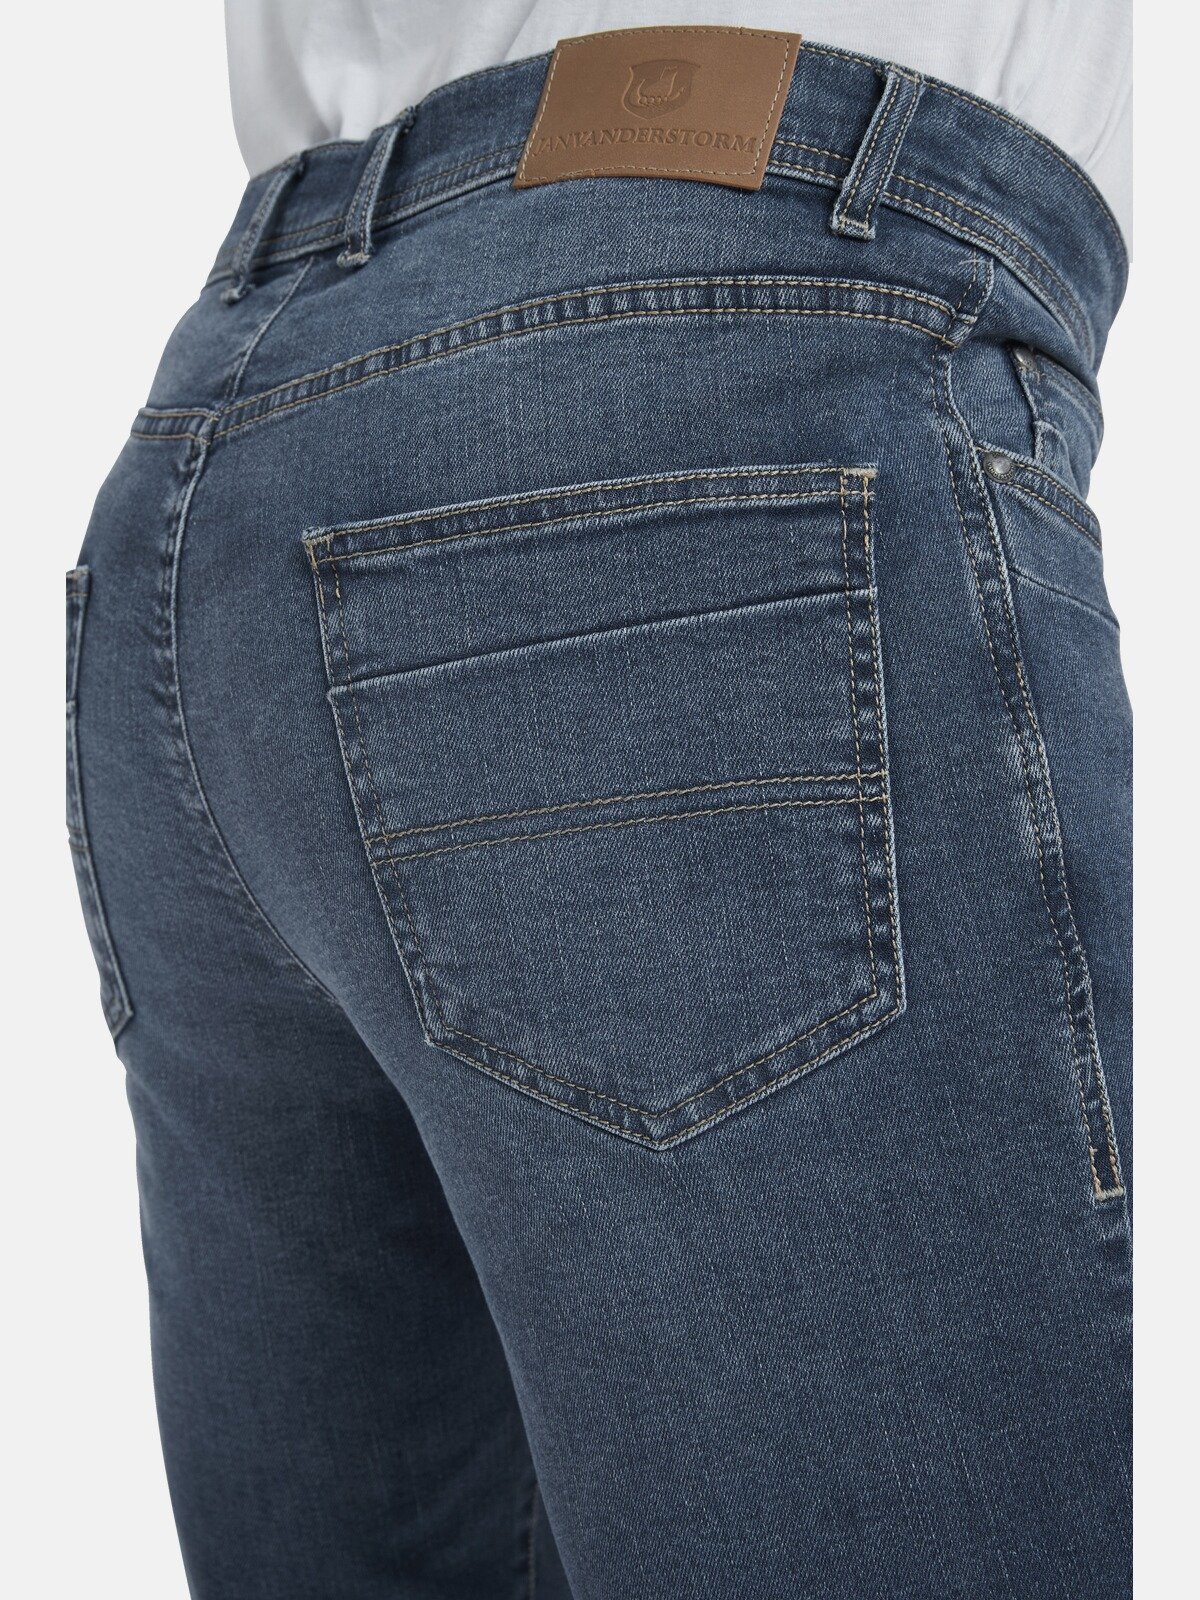 elastisch +Fit PEEKE Jan Vanderstorm Kollektion, Comfort-fit-Jeans